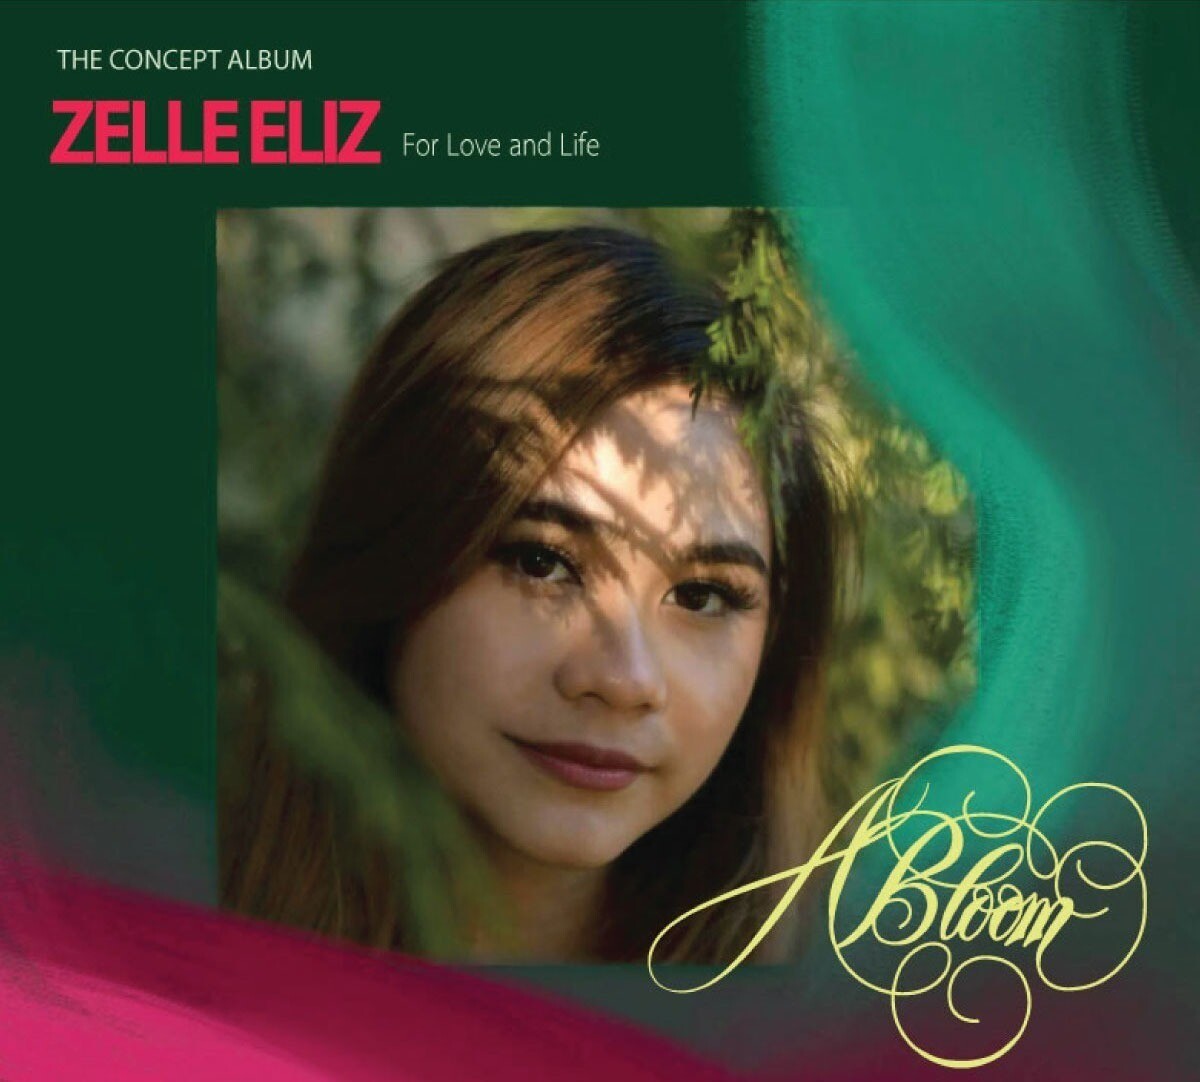 Zelle Eliz Abloom Music CD (International Buyers) (Approximately US$35.00) Includes Worldwide Shipping